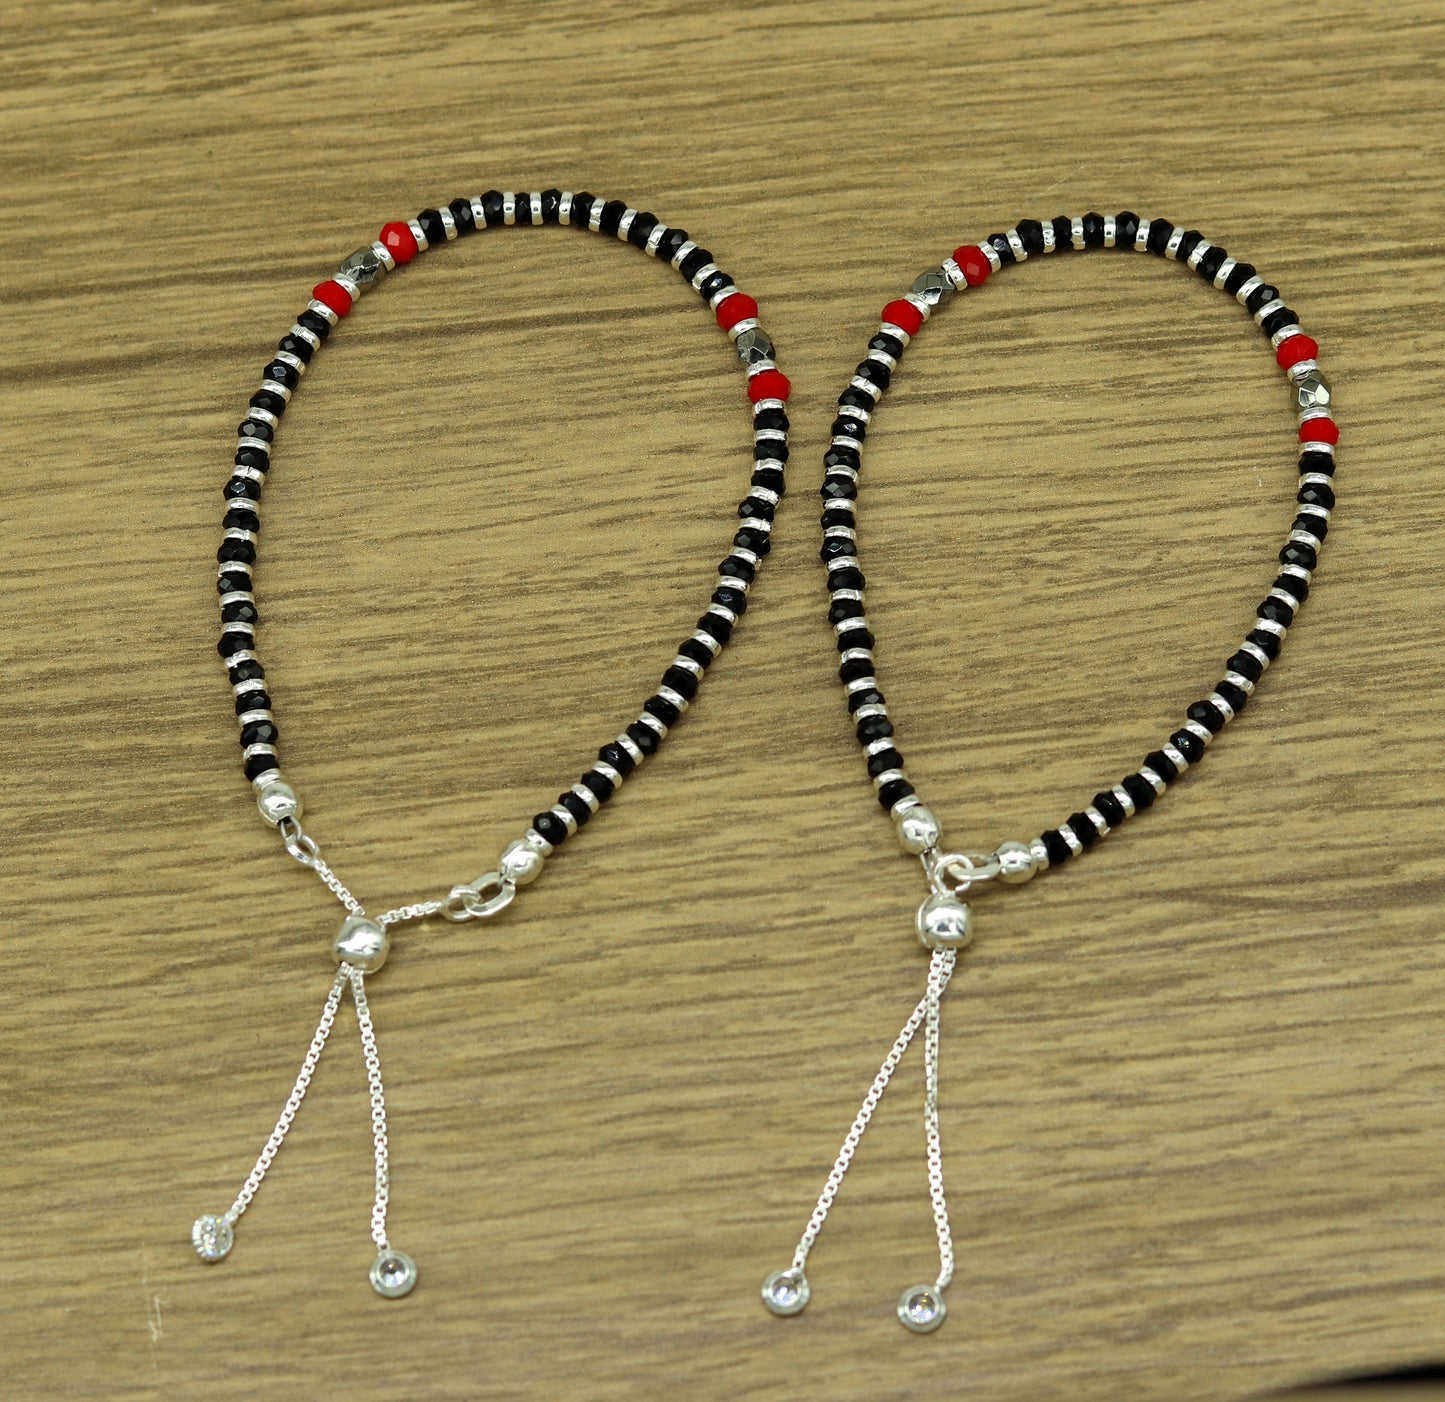 7" long 925 sterling silver gorgeous black and red beaded bracelet, charm bracelet, customized bracelet adjustable girl's jewelry sbr160 - TRIBAL ORNAMENTS